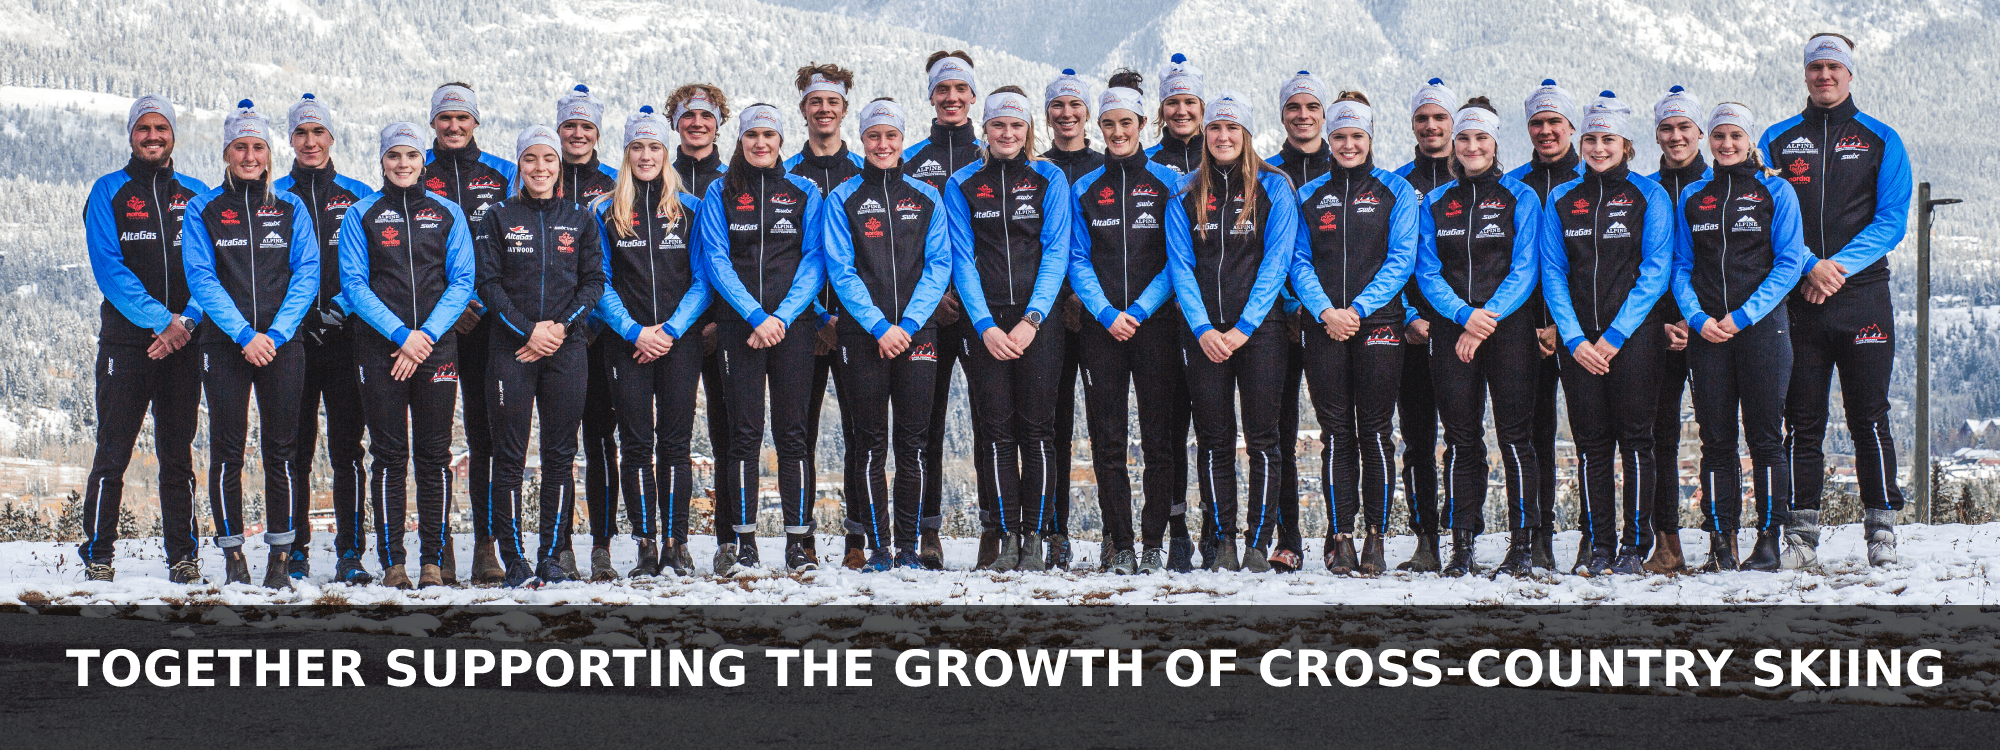 Alberta World Cup Ski Team 2021 Fundraiser